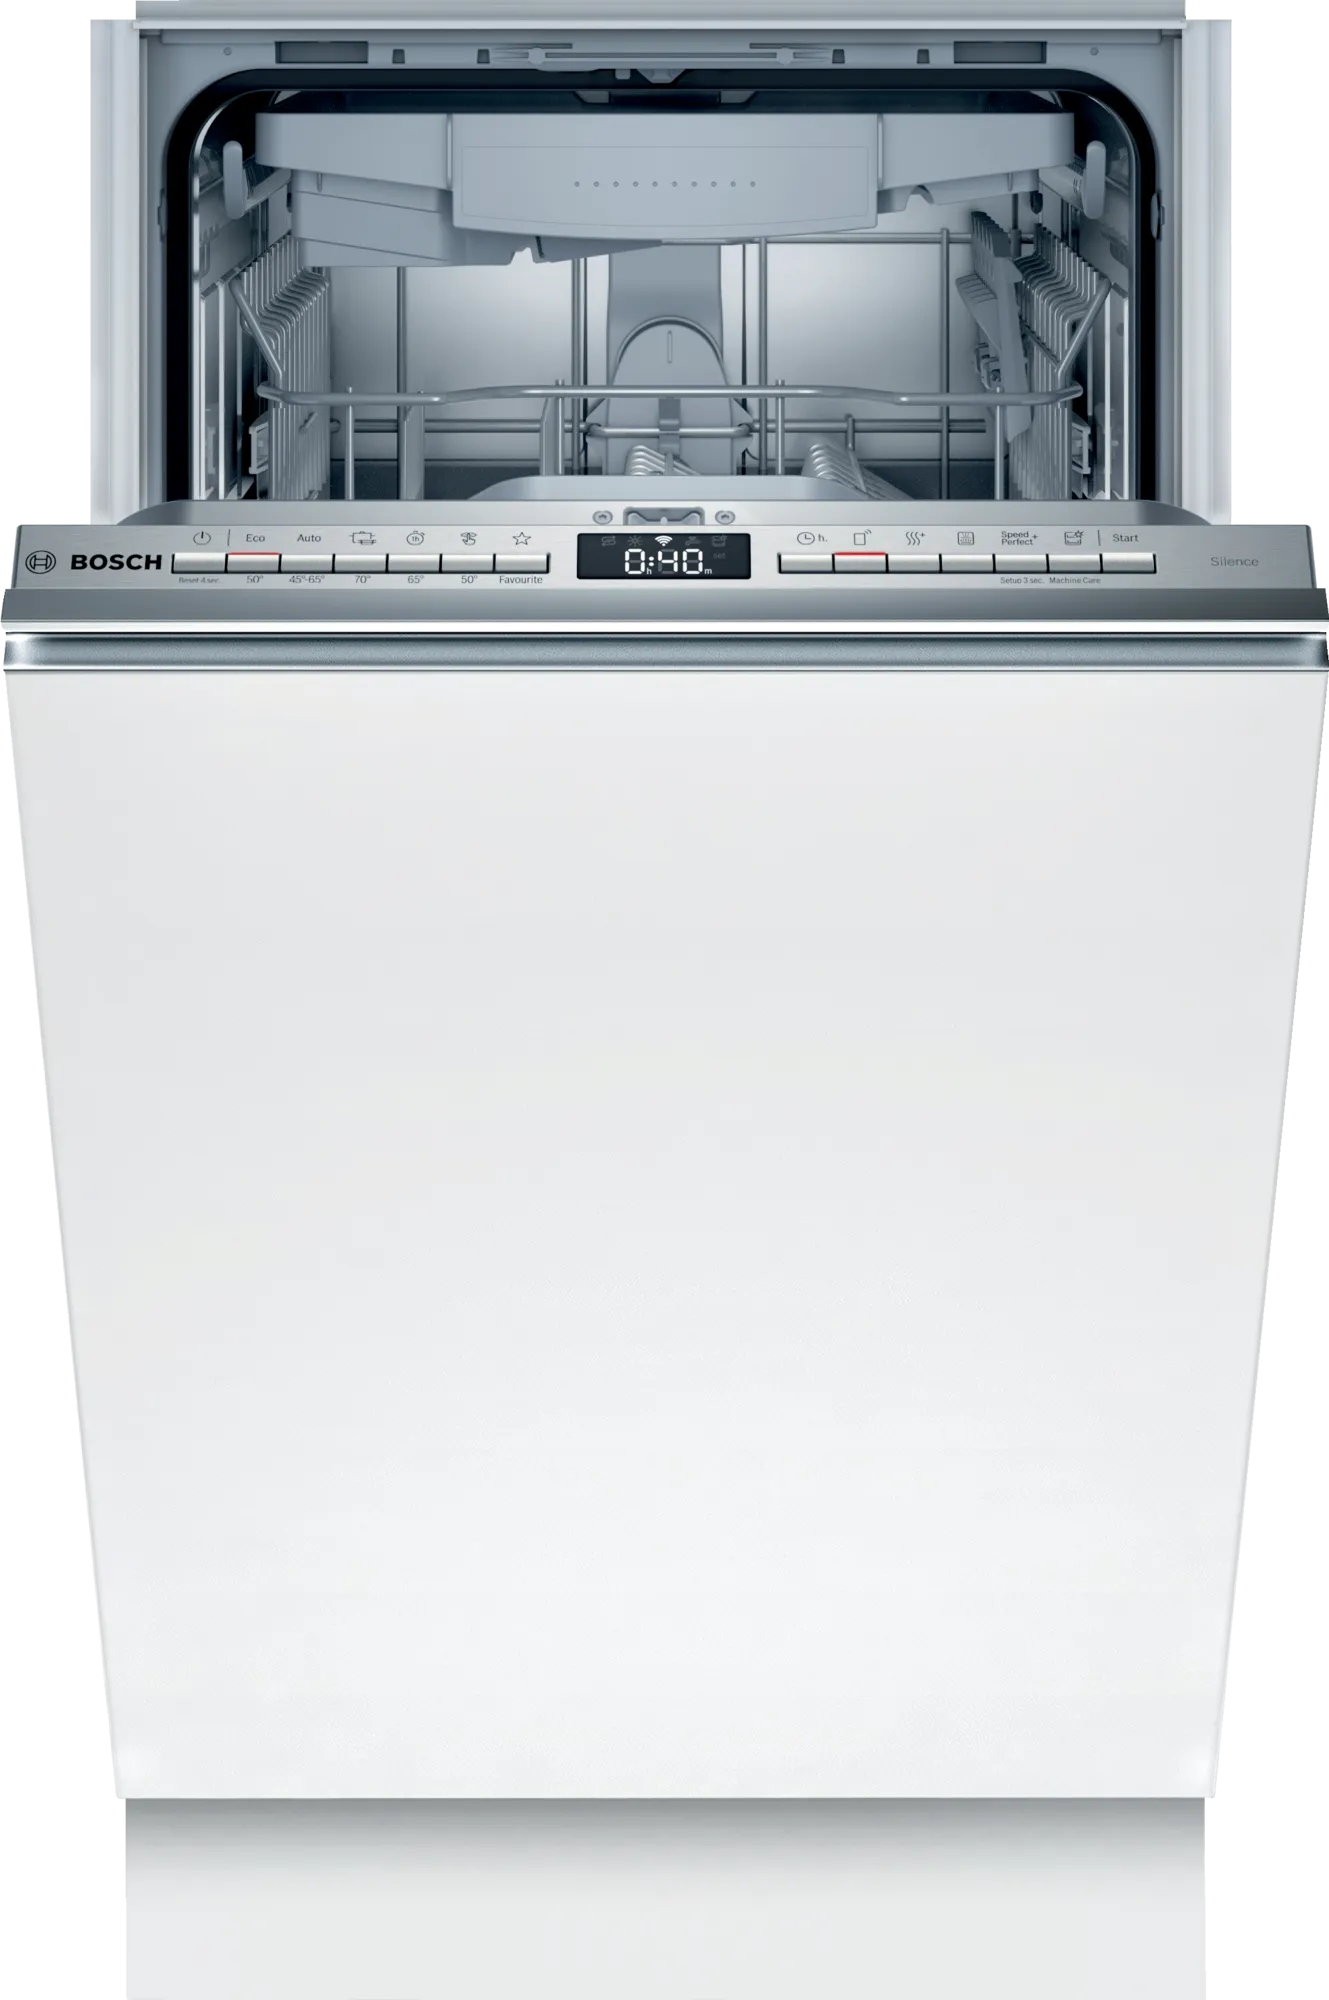 Gorenje gv520e10. Встраиваемая посудомоечная машина Bosch SMV 4evx14 e. Посудомоечная машина Bosch 60 встраиваемая. Встраиваемая посудомоечная машина Bosch smv4hvx31e. Купить посудомоечную машину 45 см бош